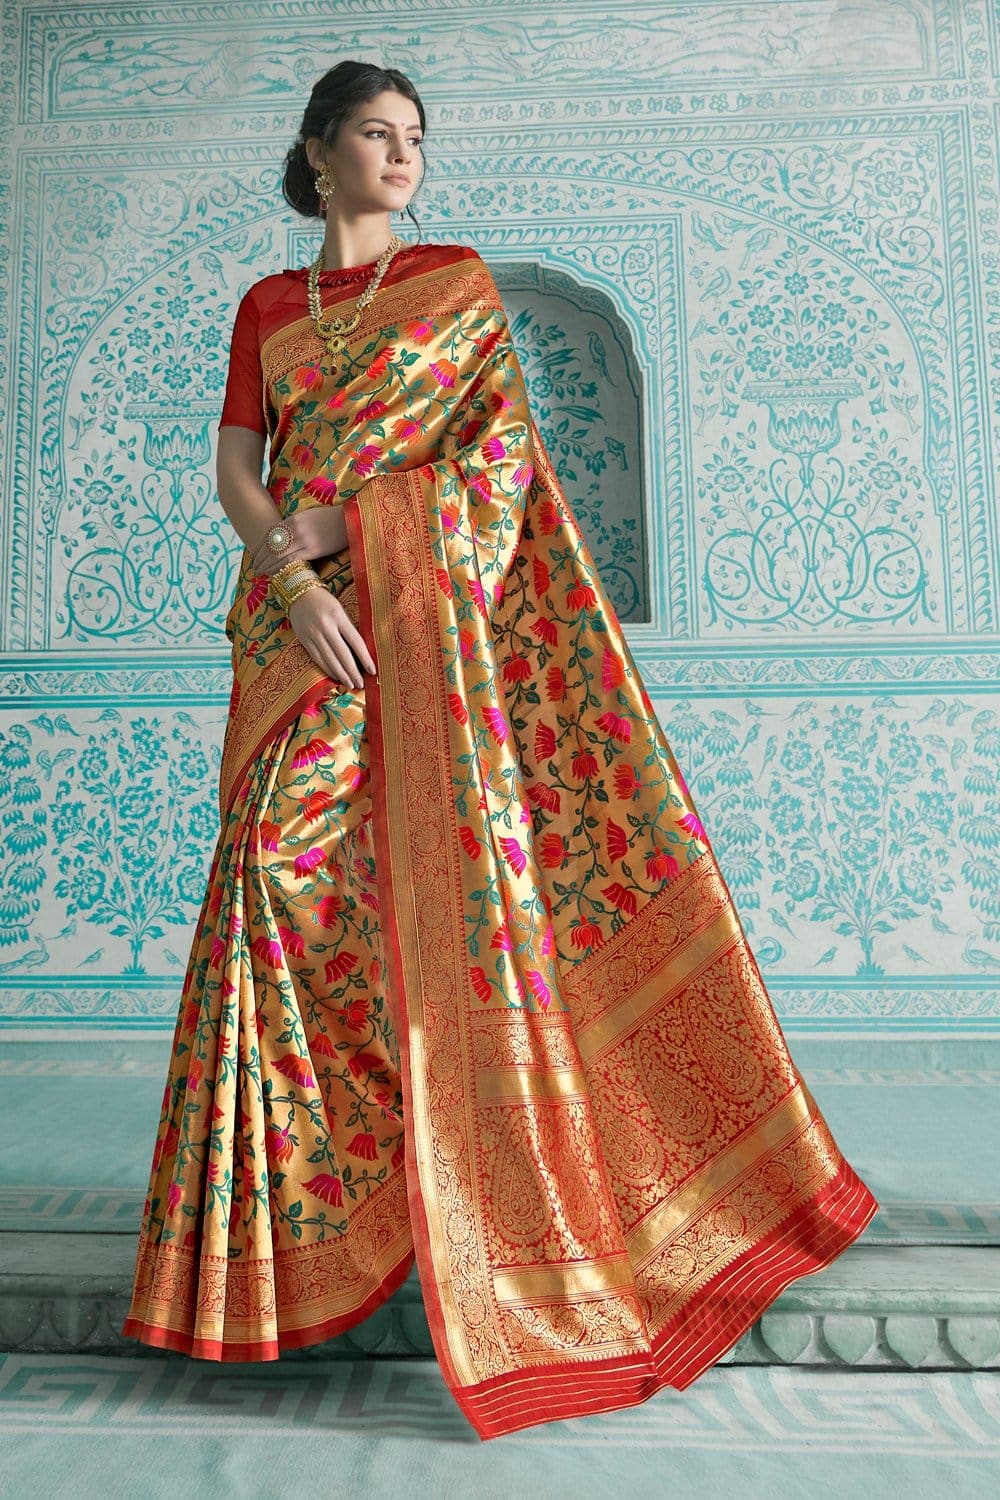 buy paithani saree online Archives - FashionBuzzer.com